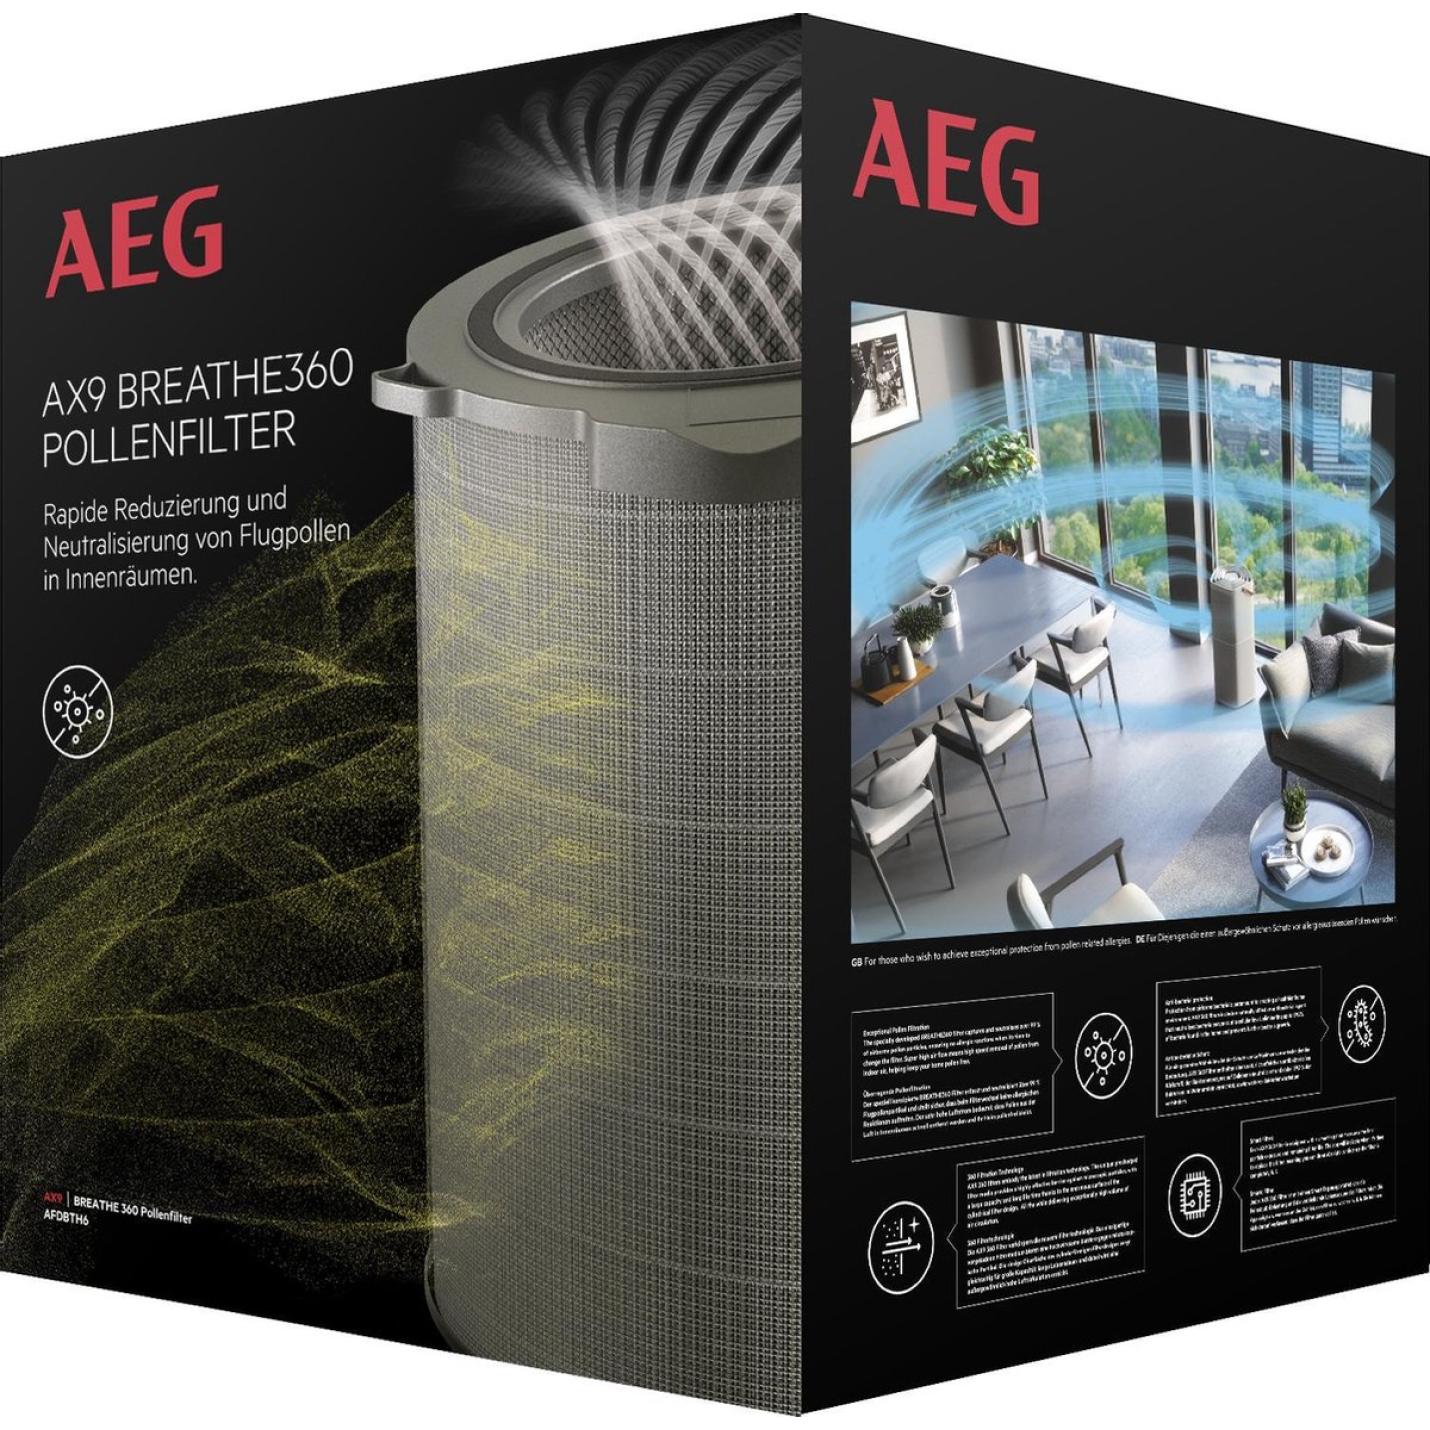 AEG AFDBTH6 AX9 Breathe 360 pollen filter   Filter voor luchtbehandeling 1